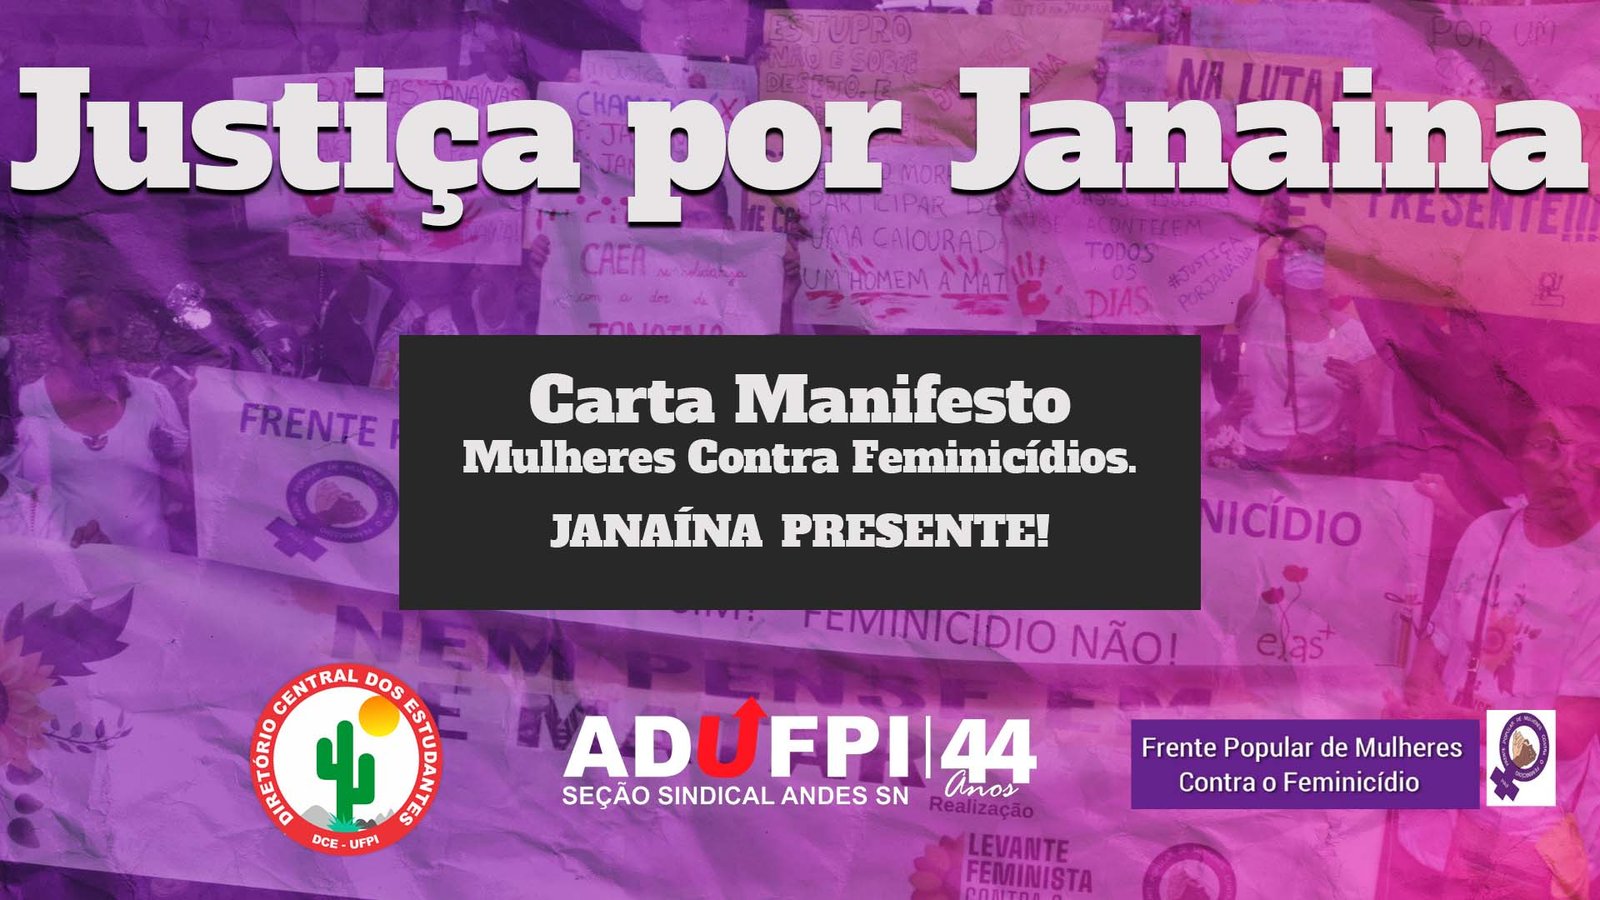 MANIFESTPO POR JANAINA! Mulheres Contra Feminicídios. JANAÍNA PRESENTE!